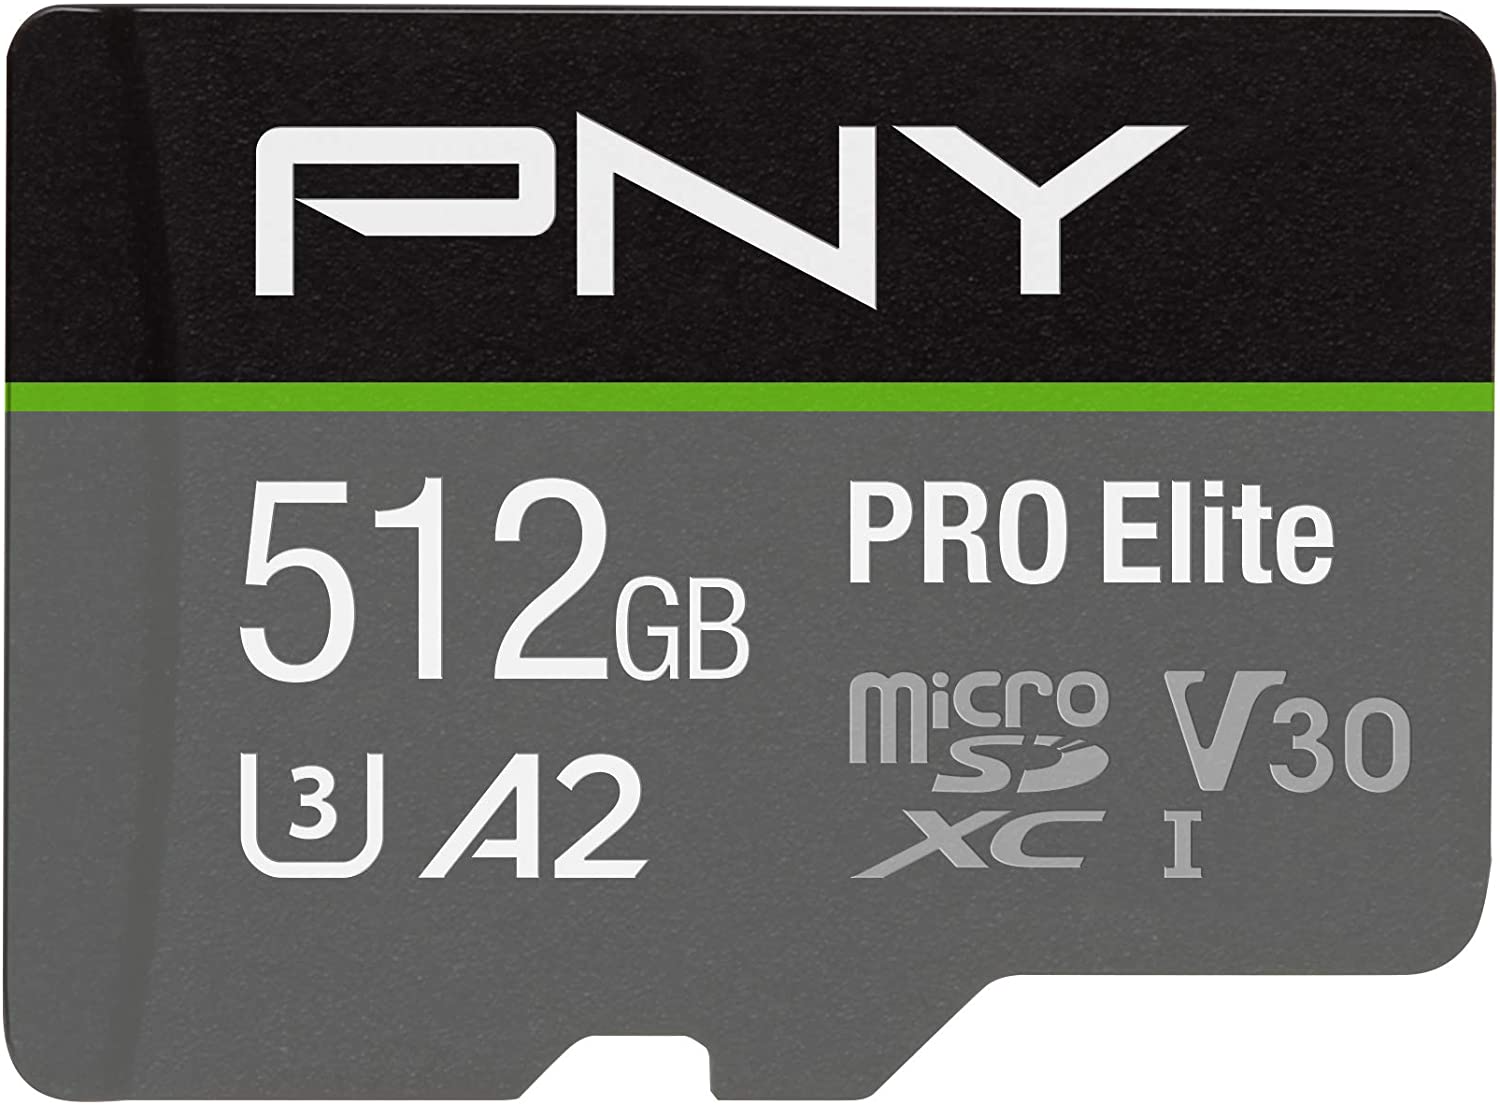 Cartão microSD PNY 512gb Pro Elite em fundo branco